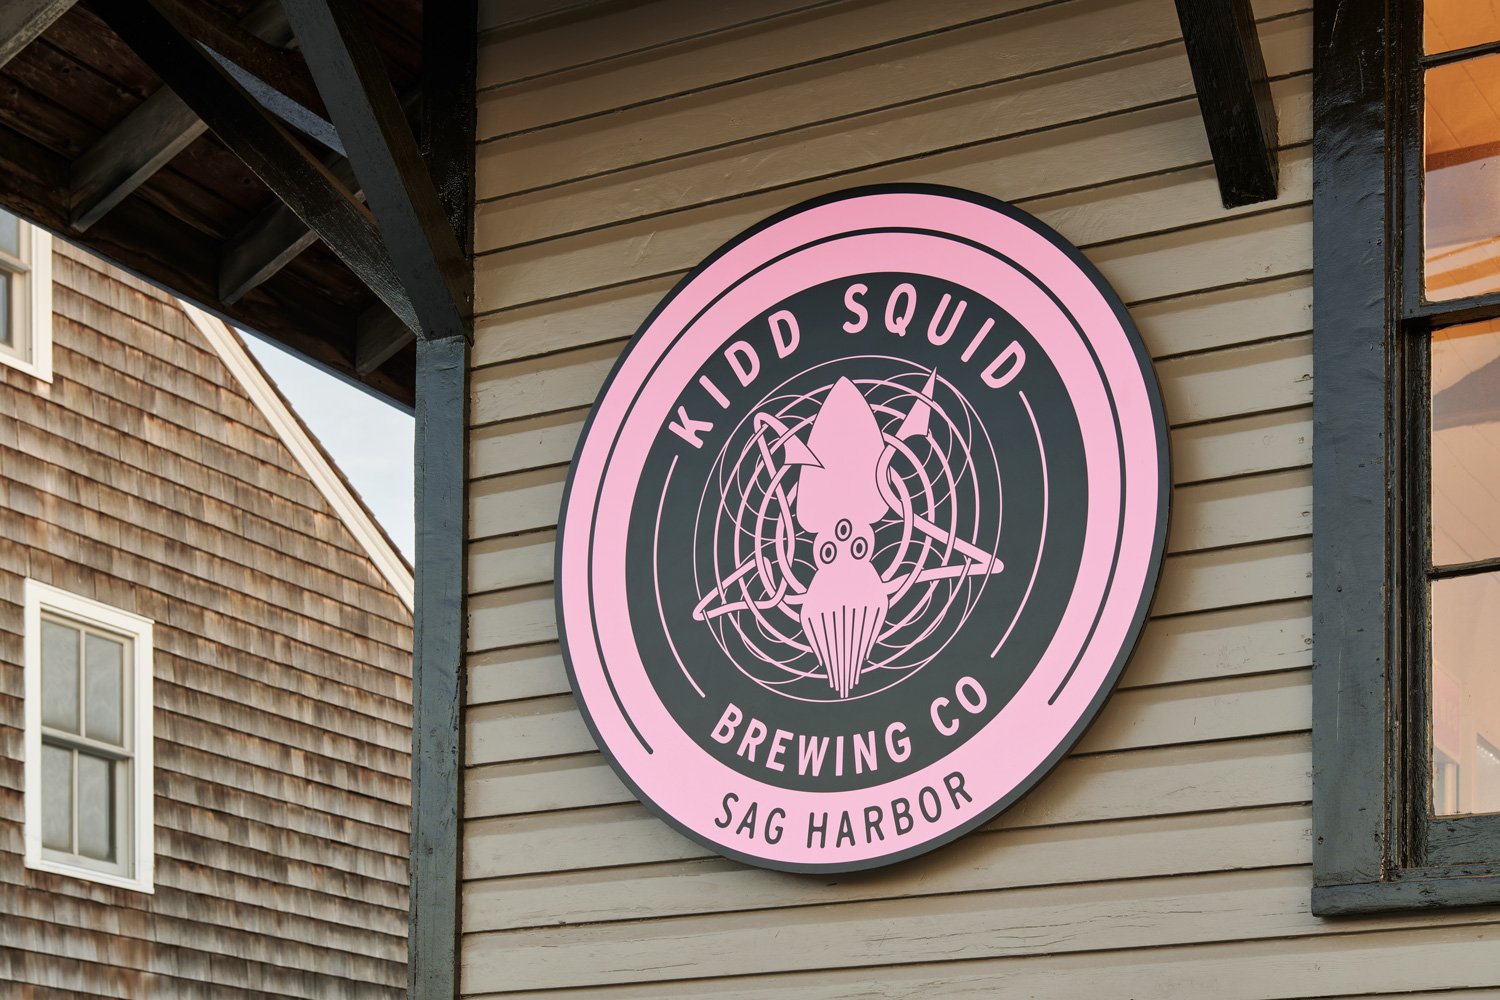  Exterior, logo, Kidd Squid Brewing Co., Sag Harbor, NY 